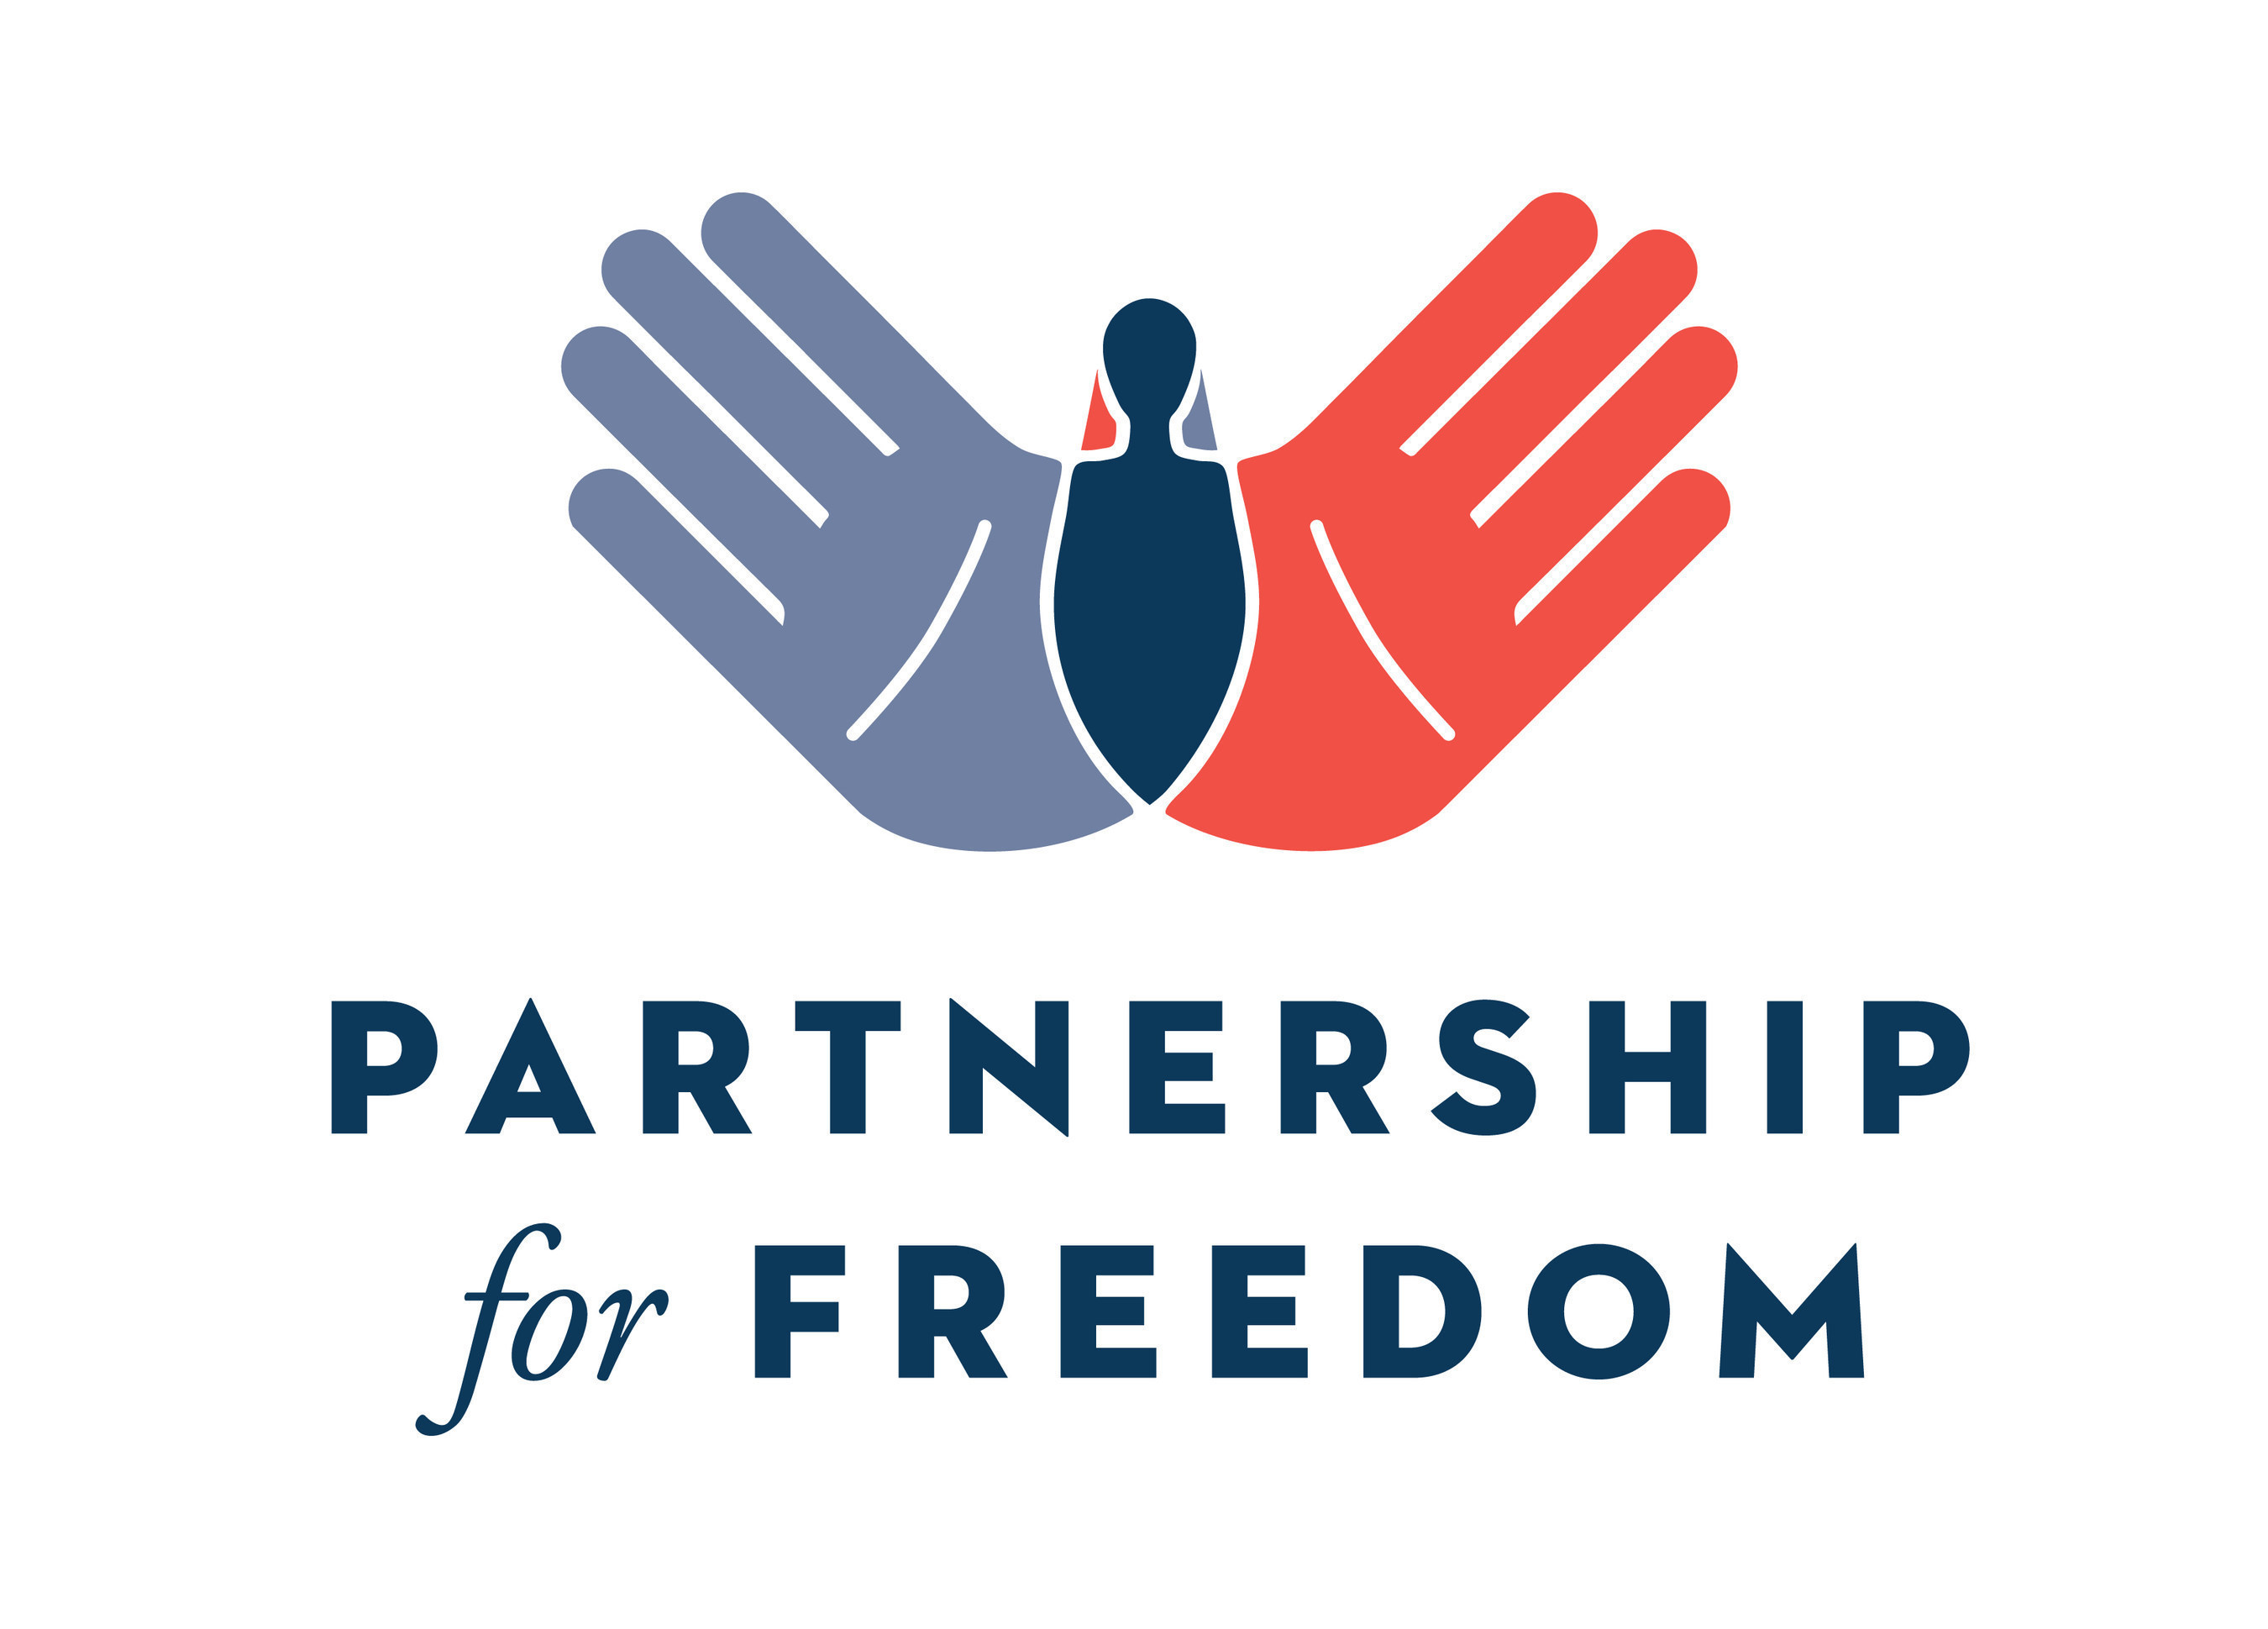 Partnership for Freedom